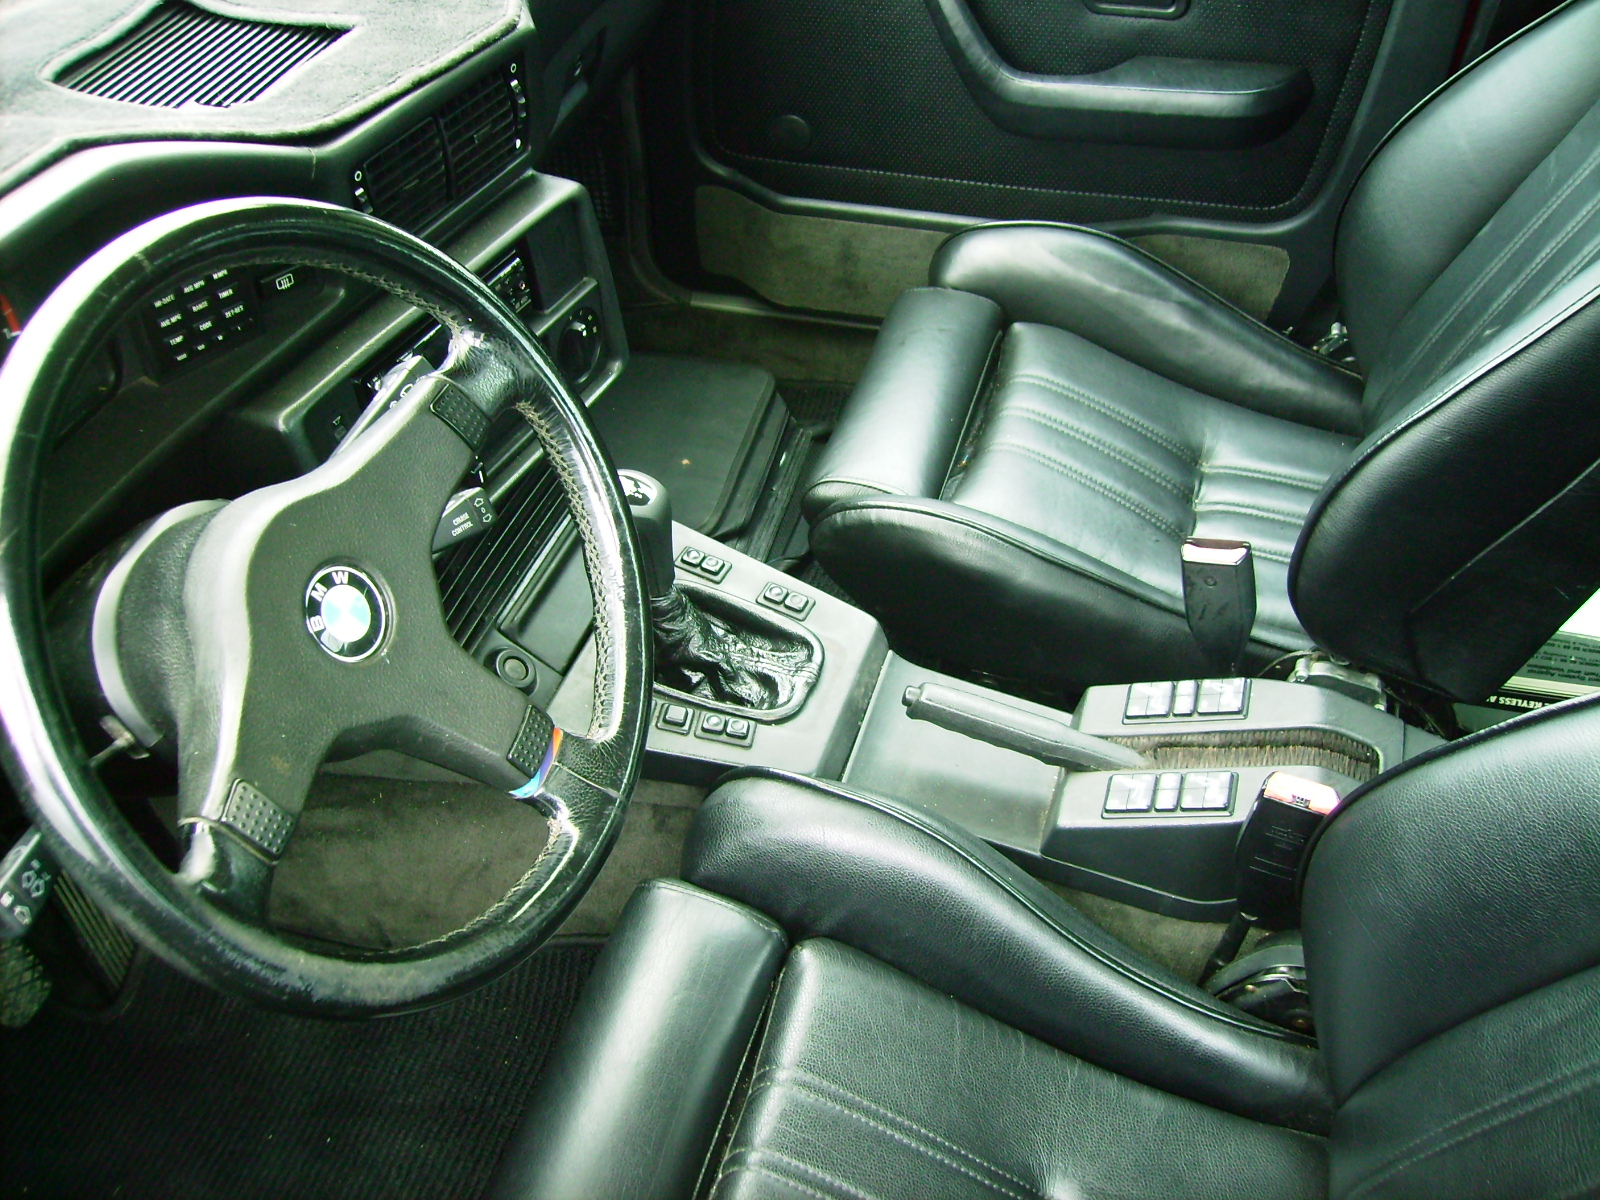 BMW 535is interior | Flickr - Photo Sharing!